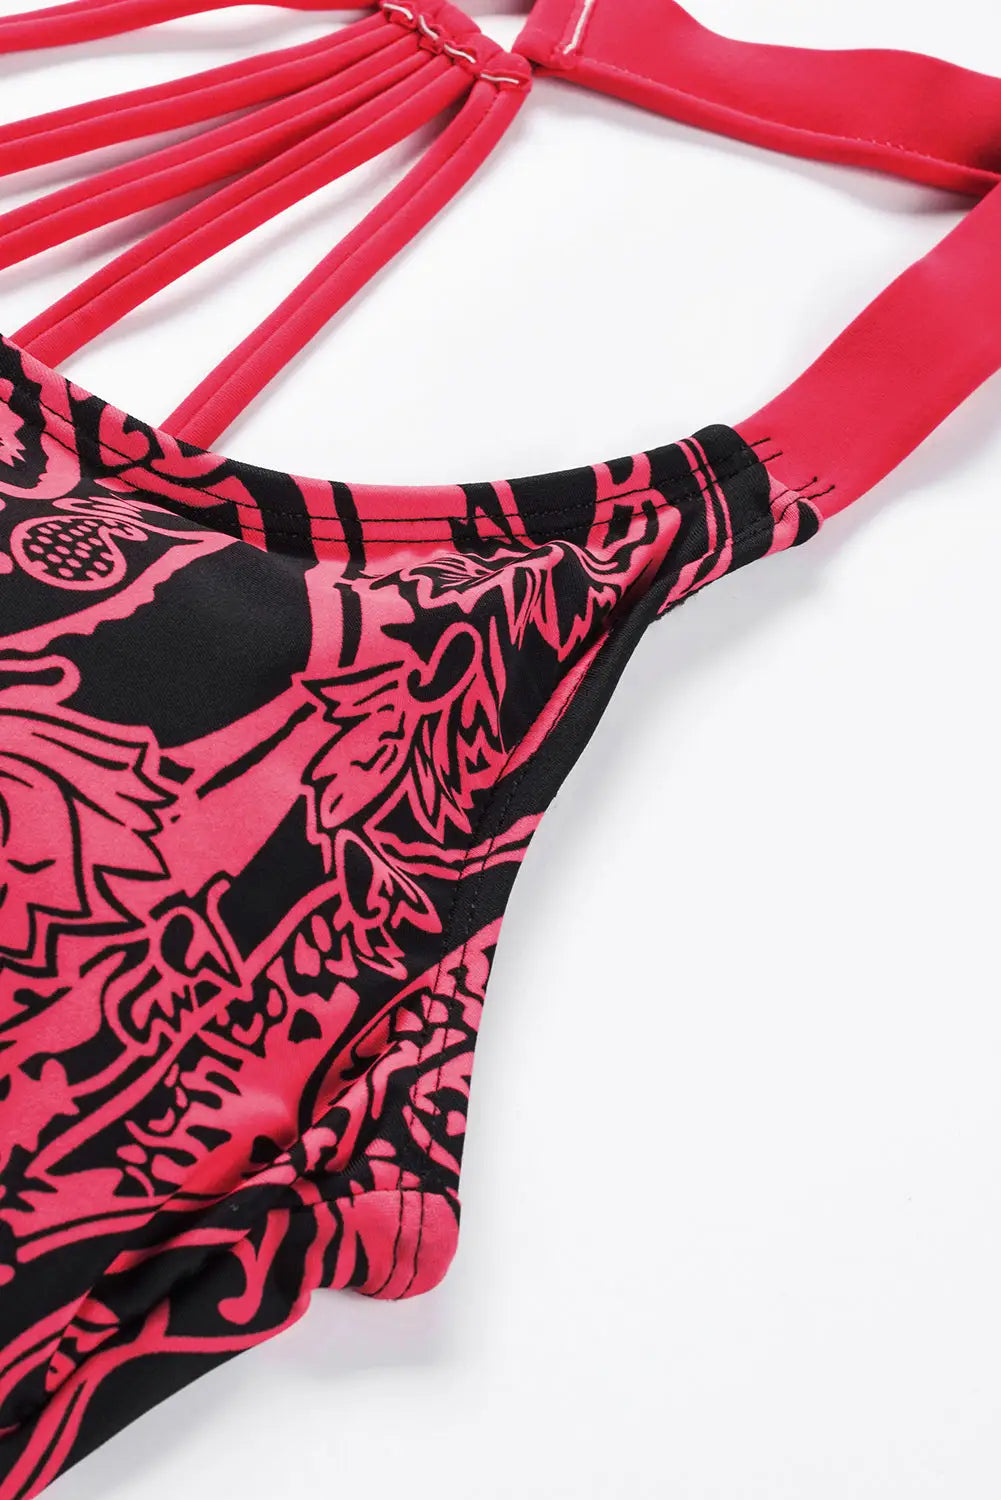 Red floral printed blouson tankini top - 3xl / 82% nylon + 18% spandex - bikini tops